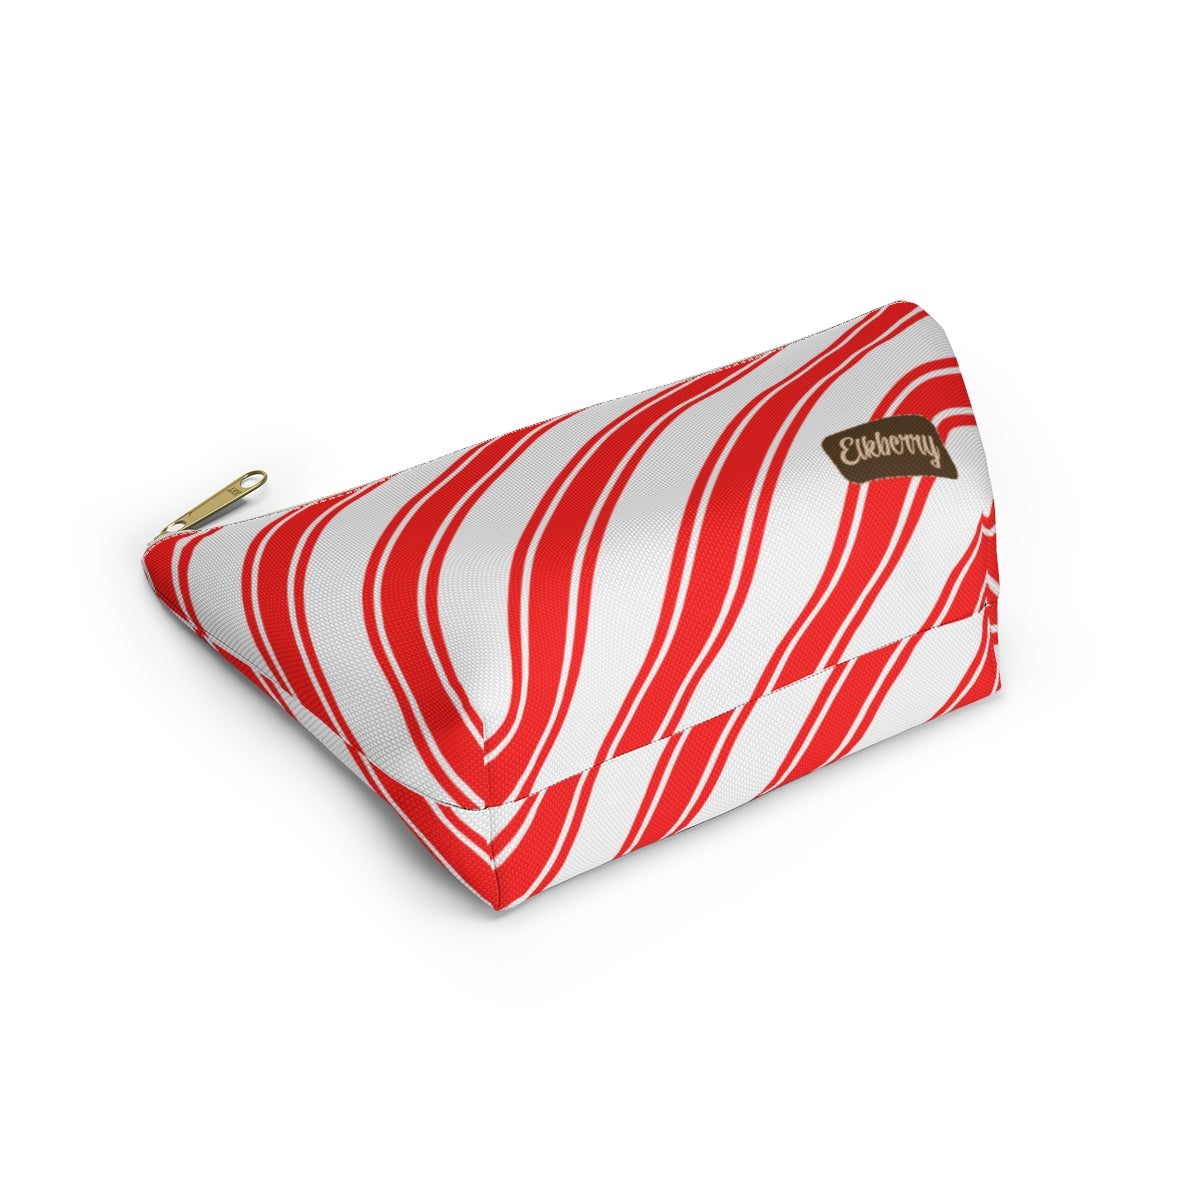 Big Bottom Zipper Pouch - Peppermint Candy Cane Stripes